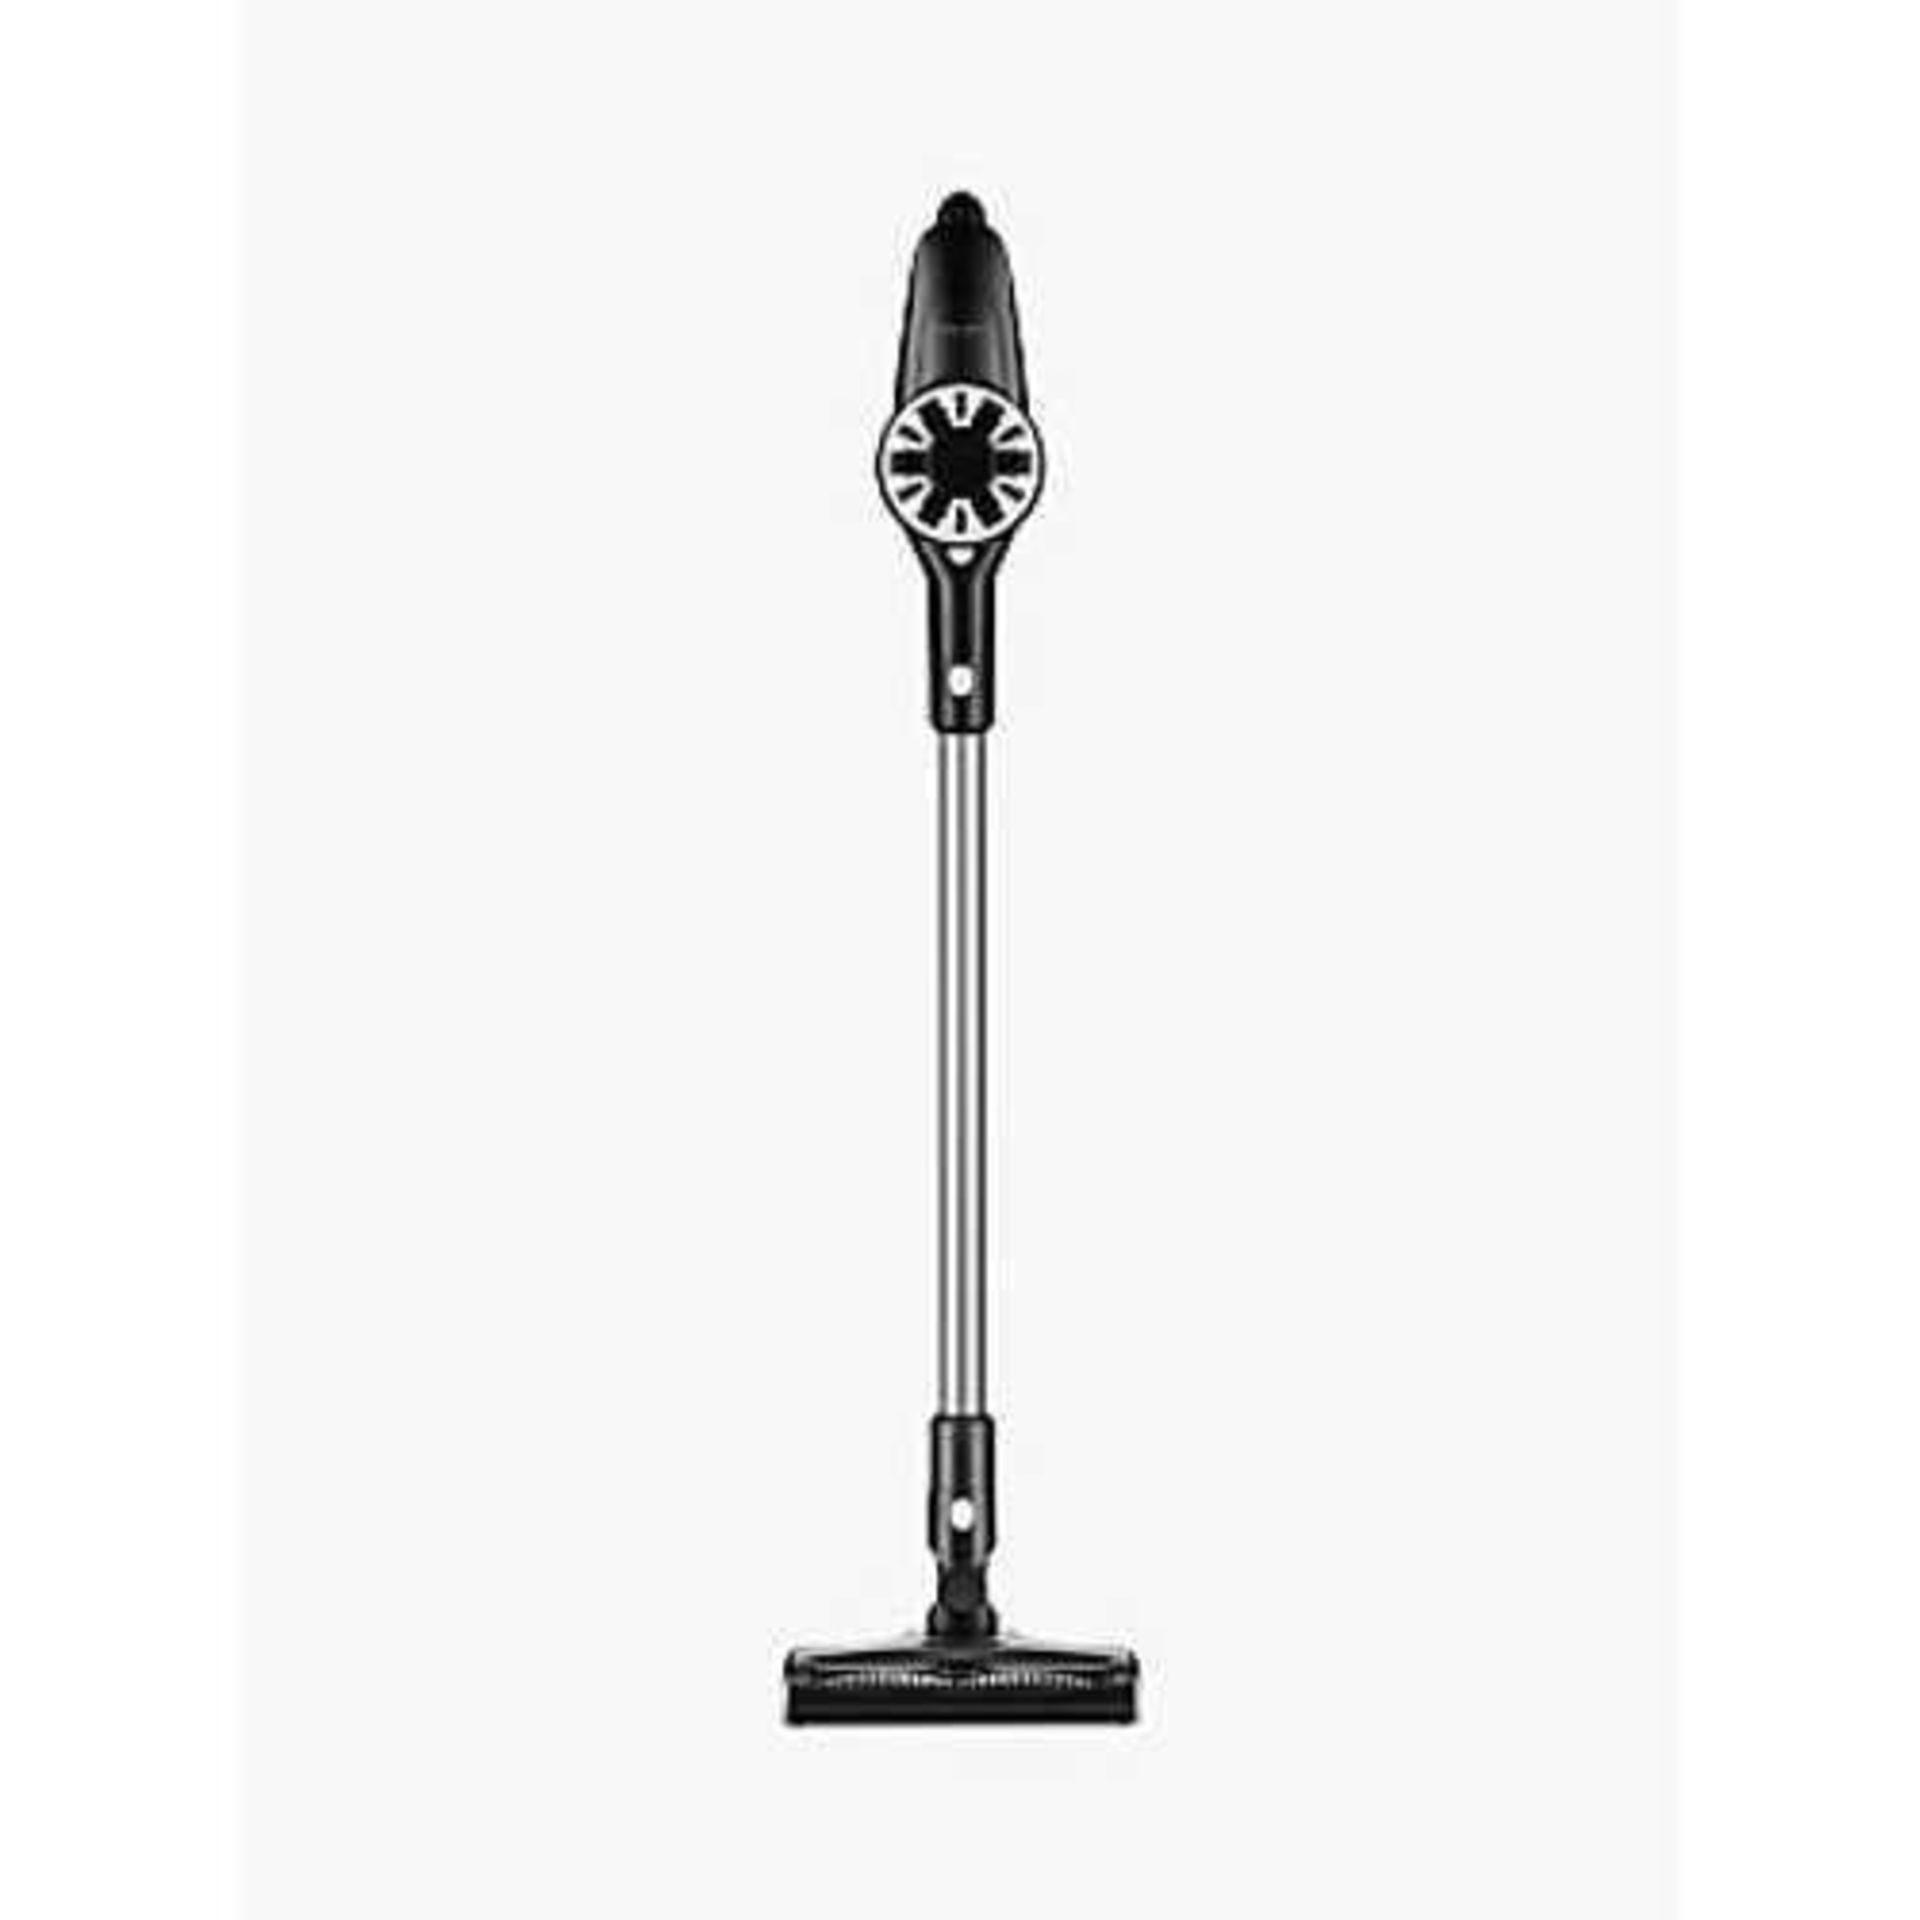 Rrp £150 John Lewis And Partners 0.5 L Cordless Stick Handheld Vacuum Cleaner